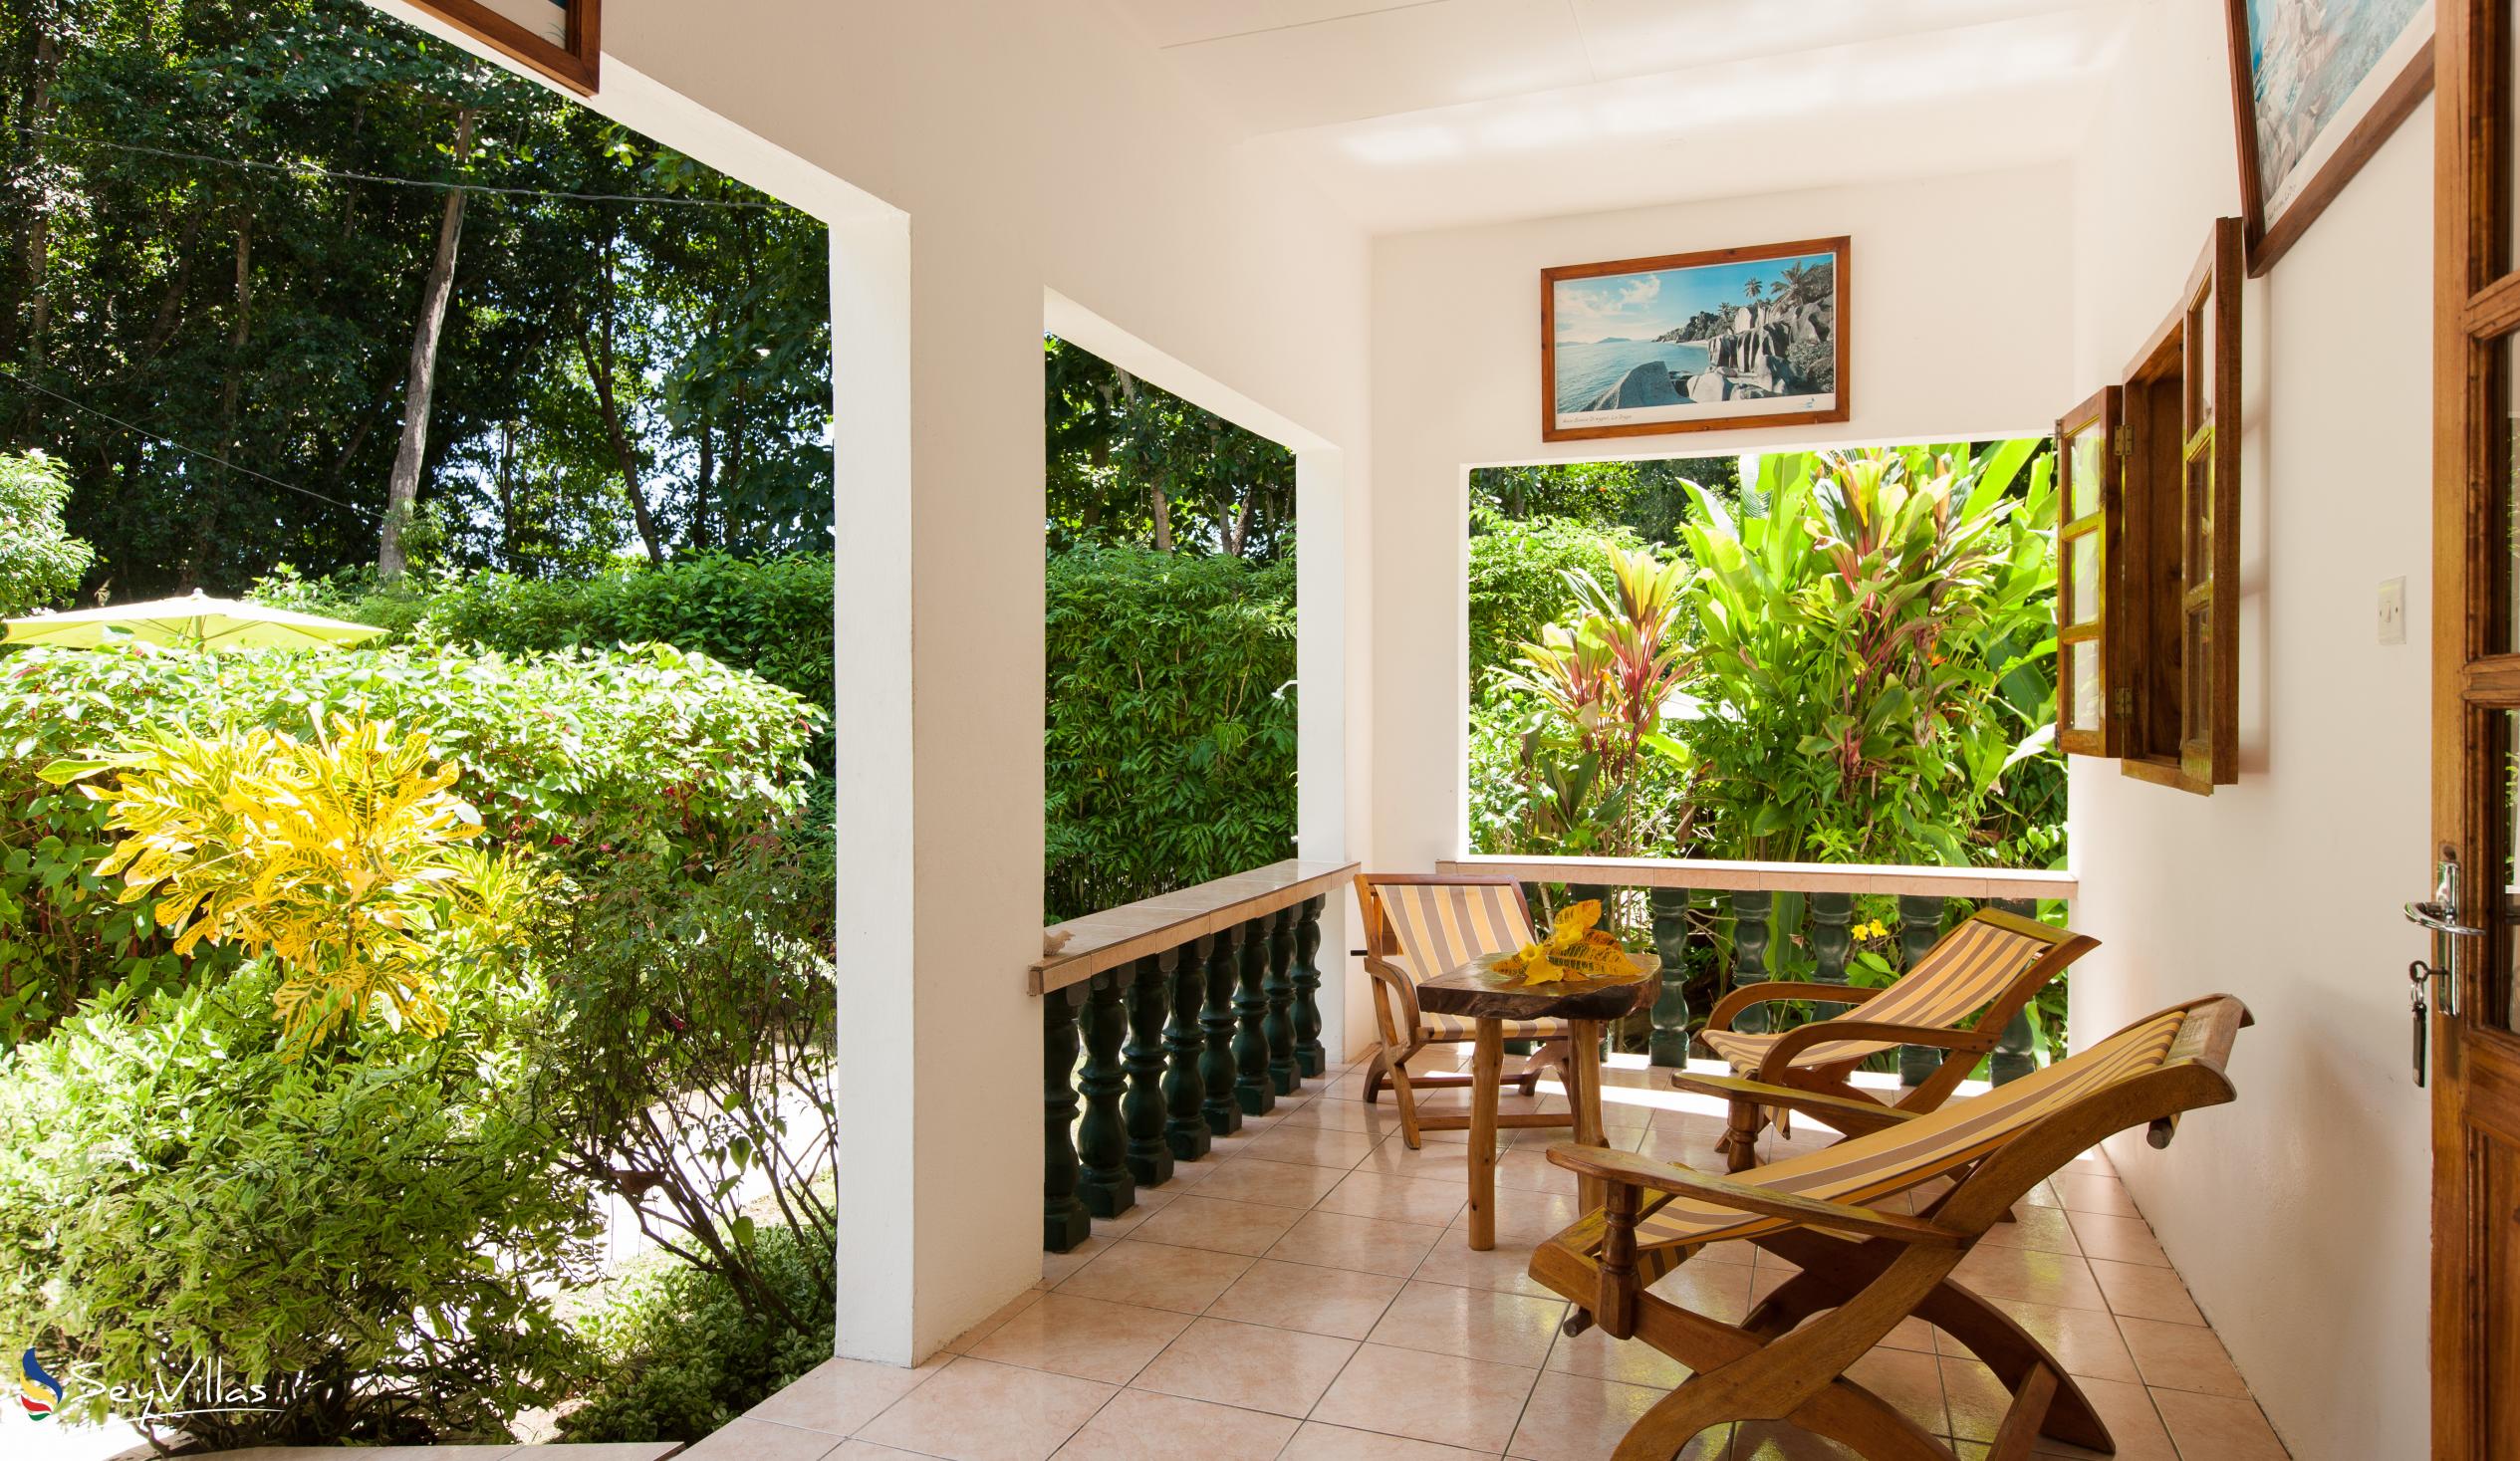 Photo 46: Tannette's Villa - Indoor area - La Digue (Seychelles)